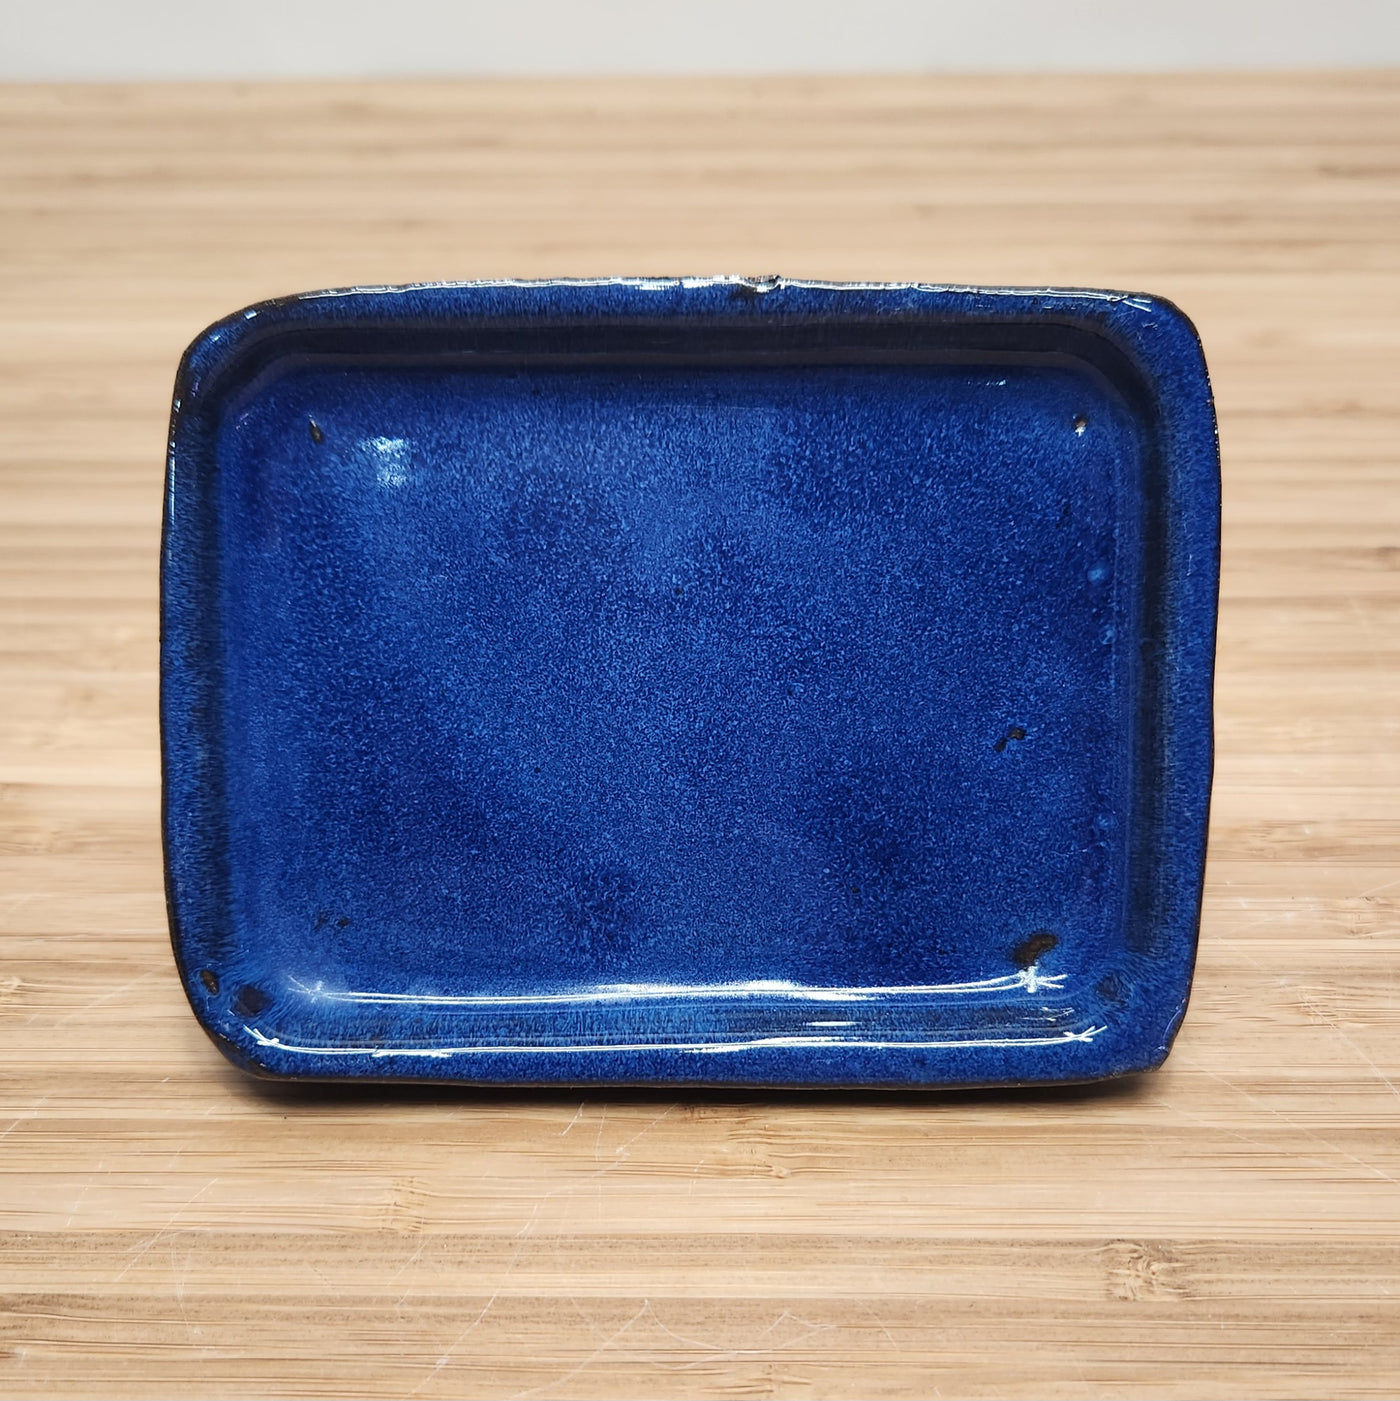 Ceramic Saucers (drip tray)